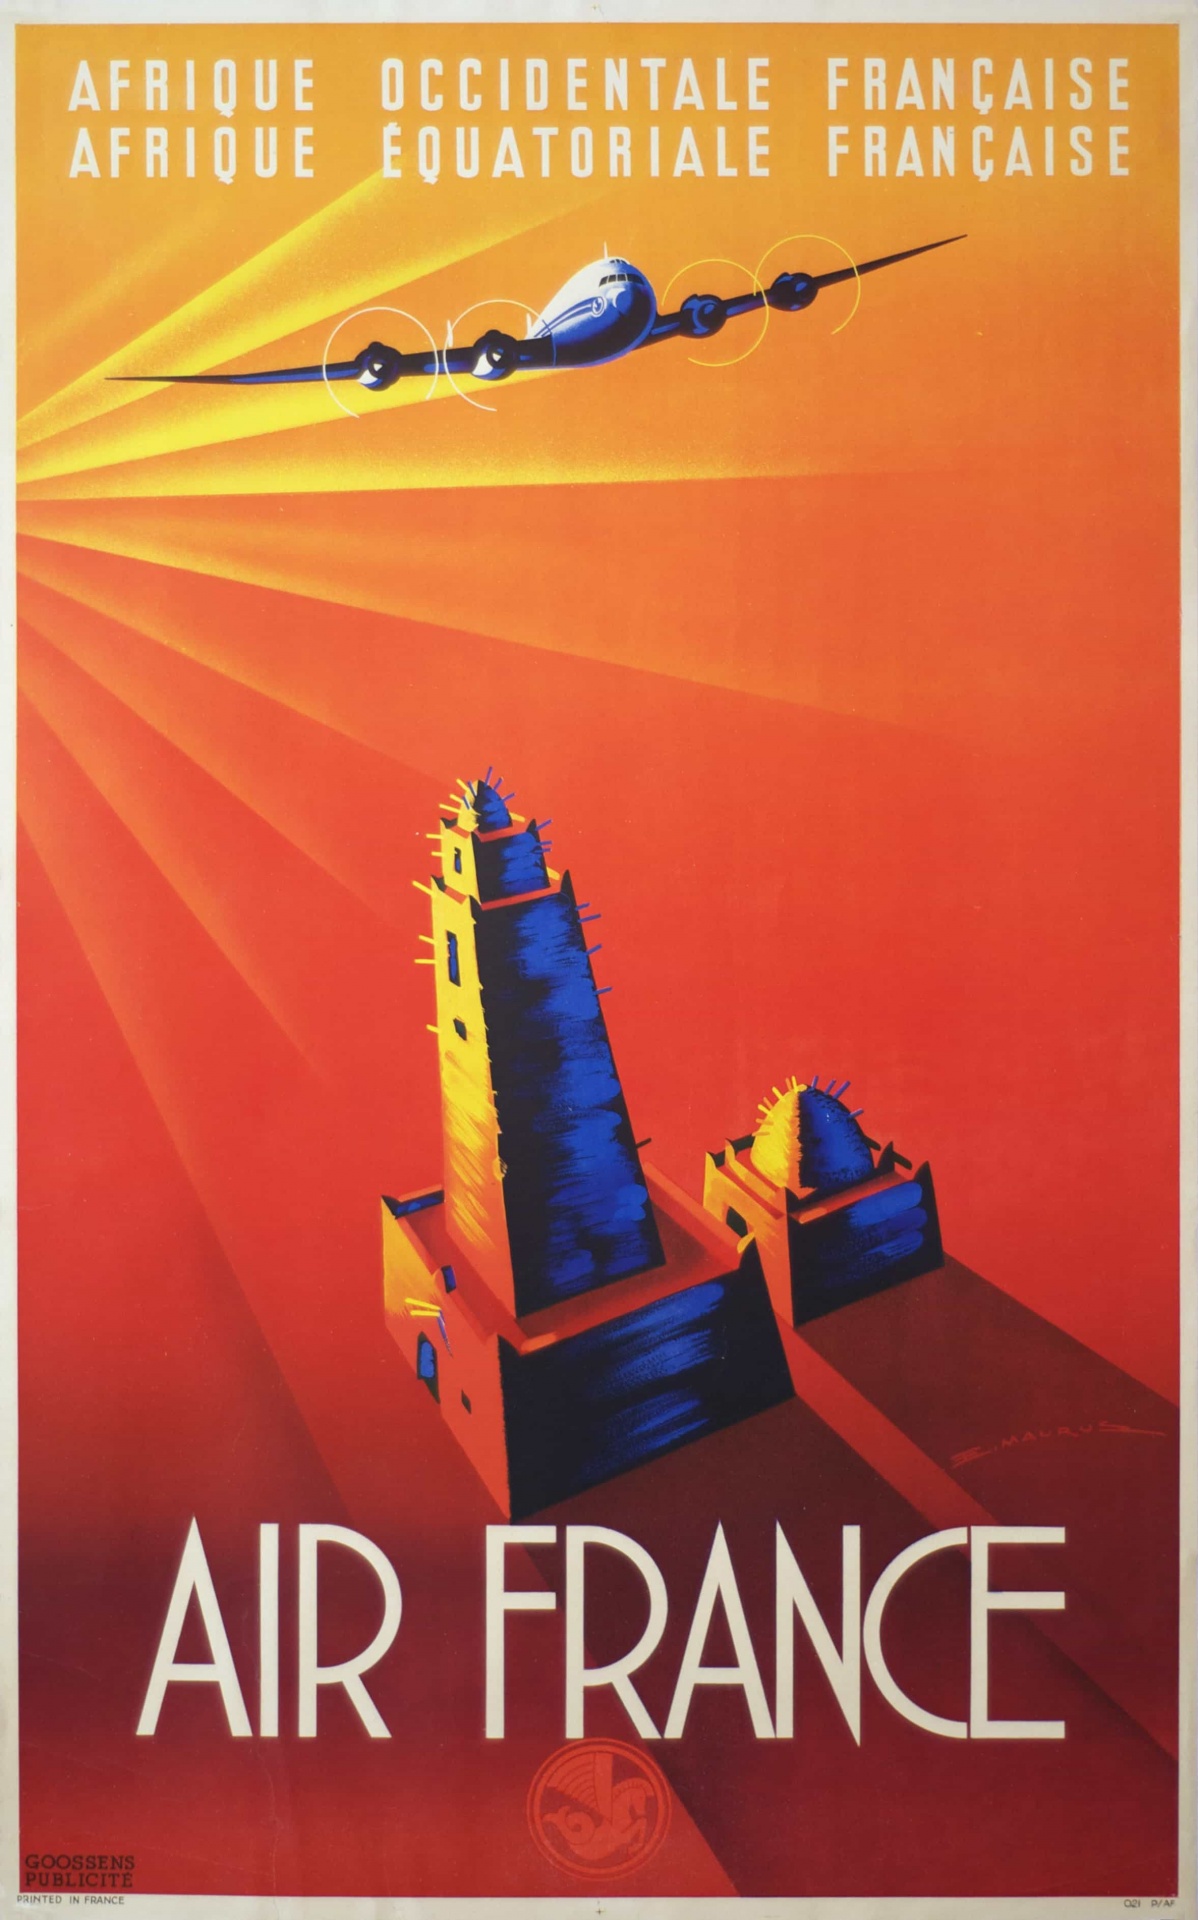 1940 Air France Travel Poster by Edmond Maurus